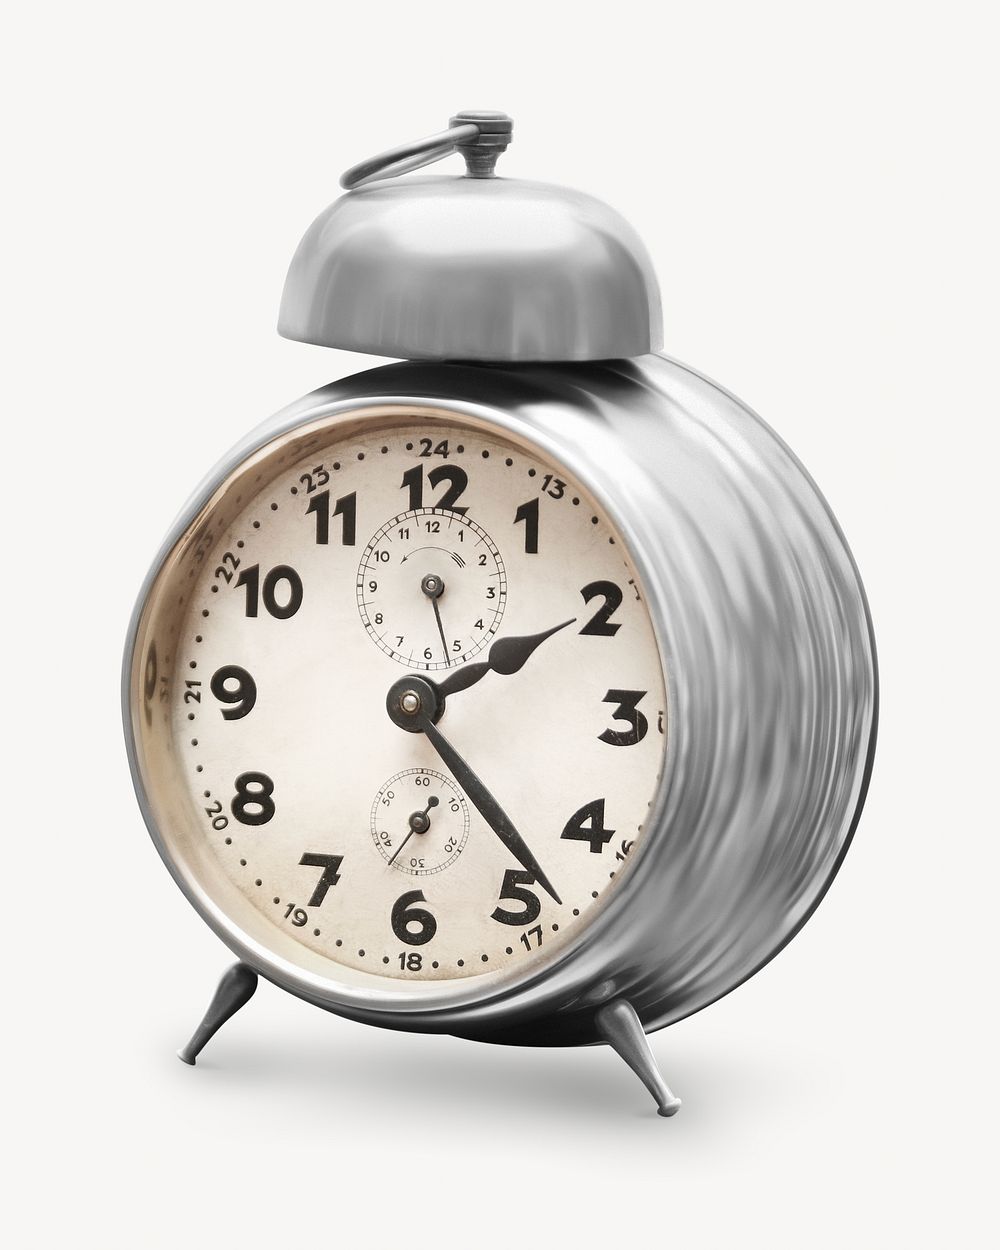 Gray alarm clock image element.